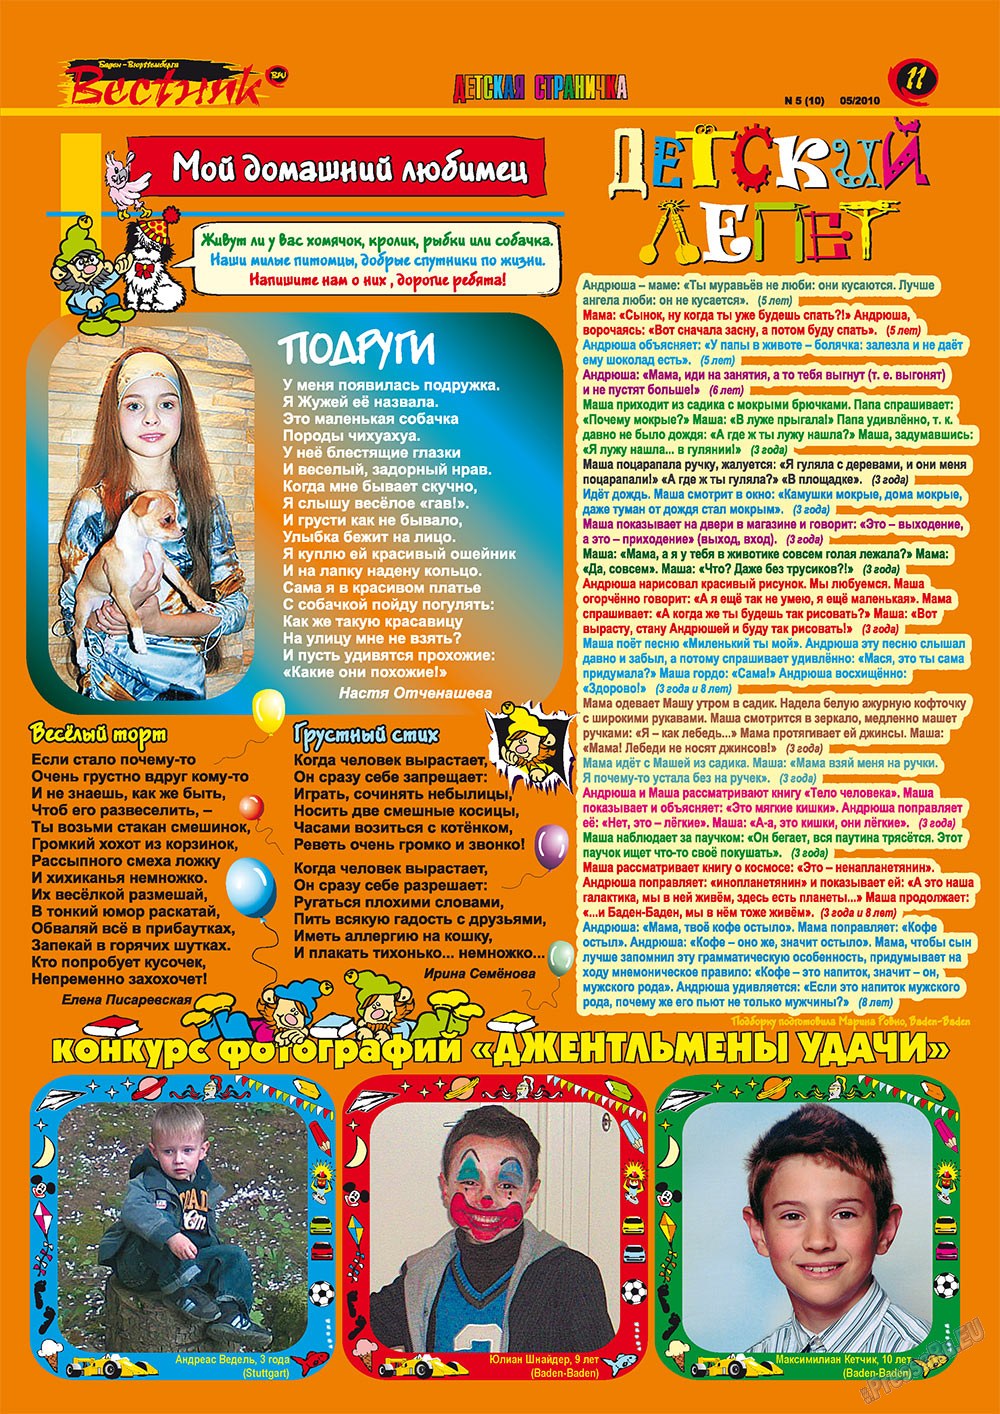 Вестник-info (журнал). 2010 год, номер 5, стр. 11